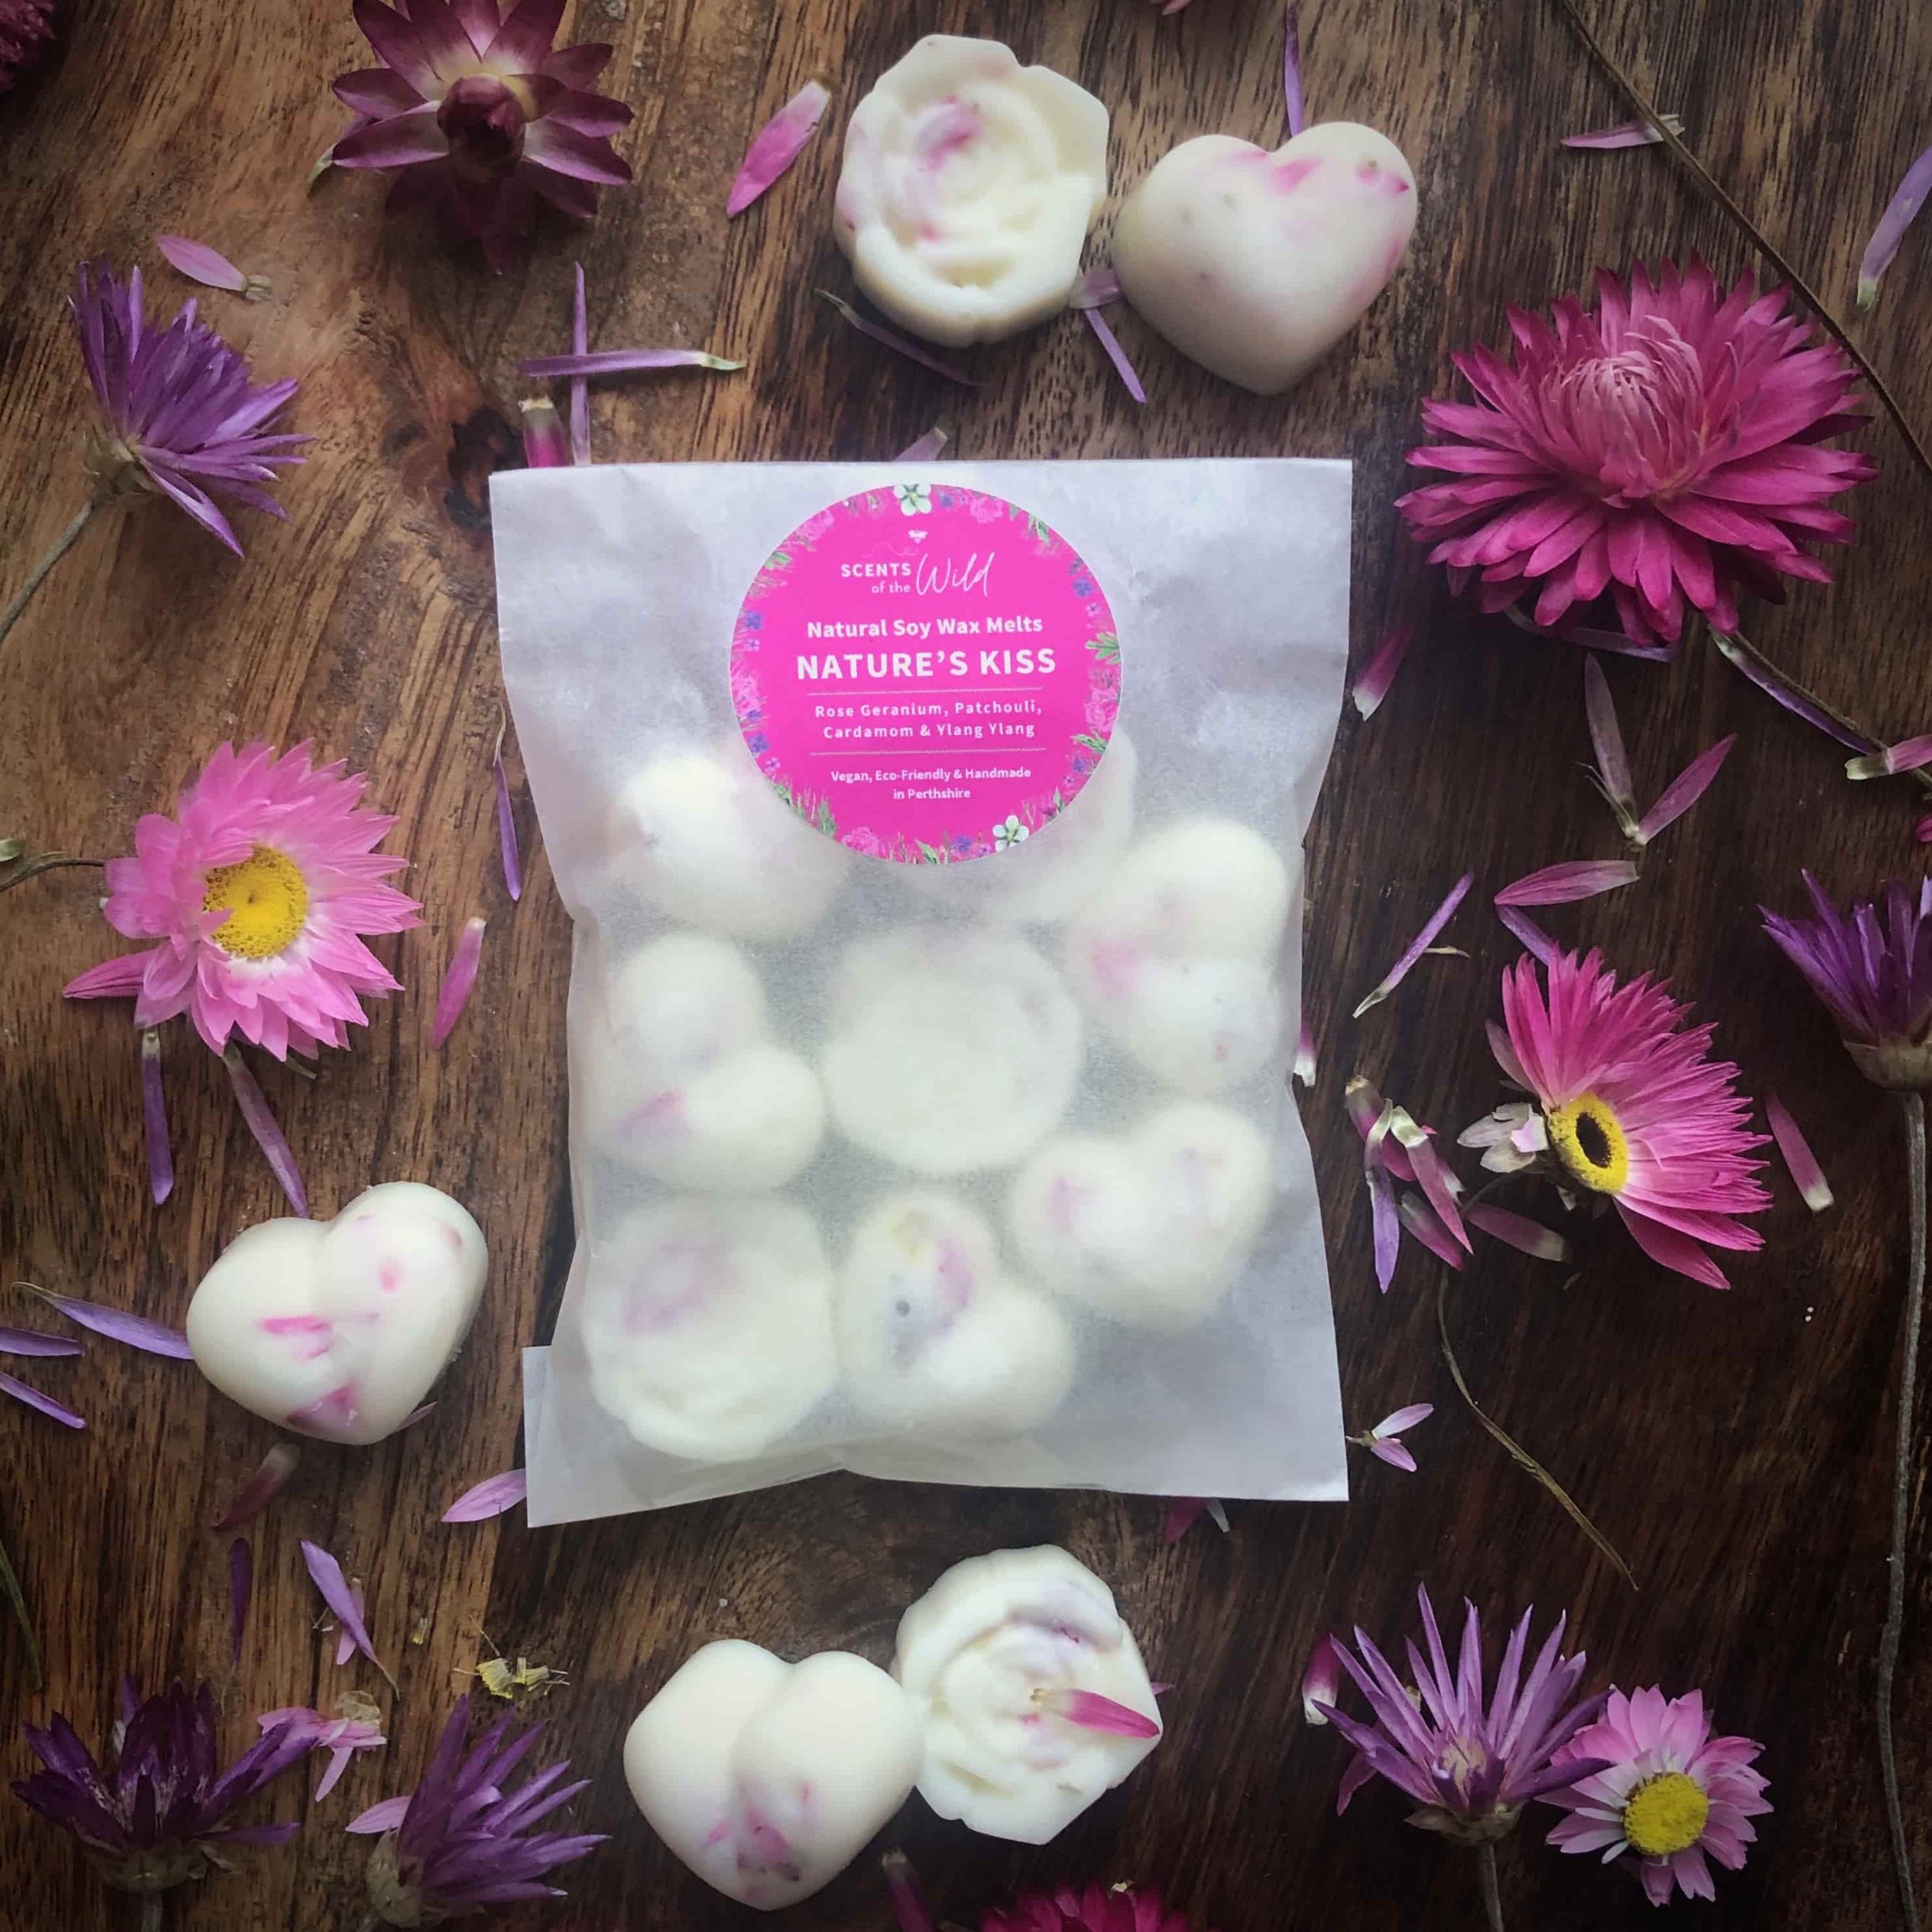 Nature's Kiss romantic botanical soy wax melts packet pink flower petals.jpg